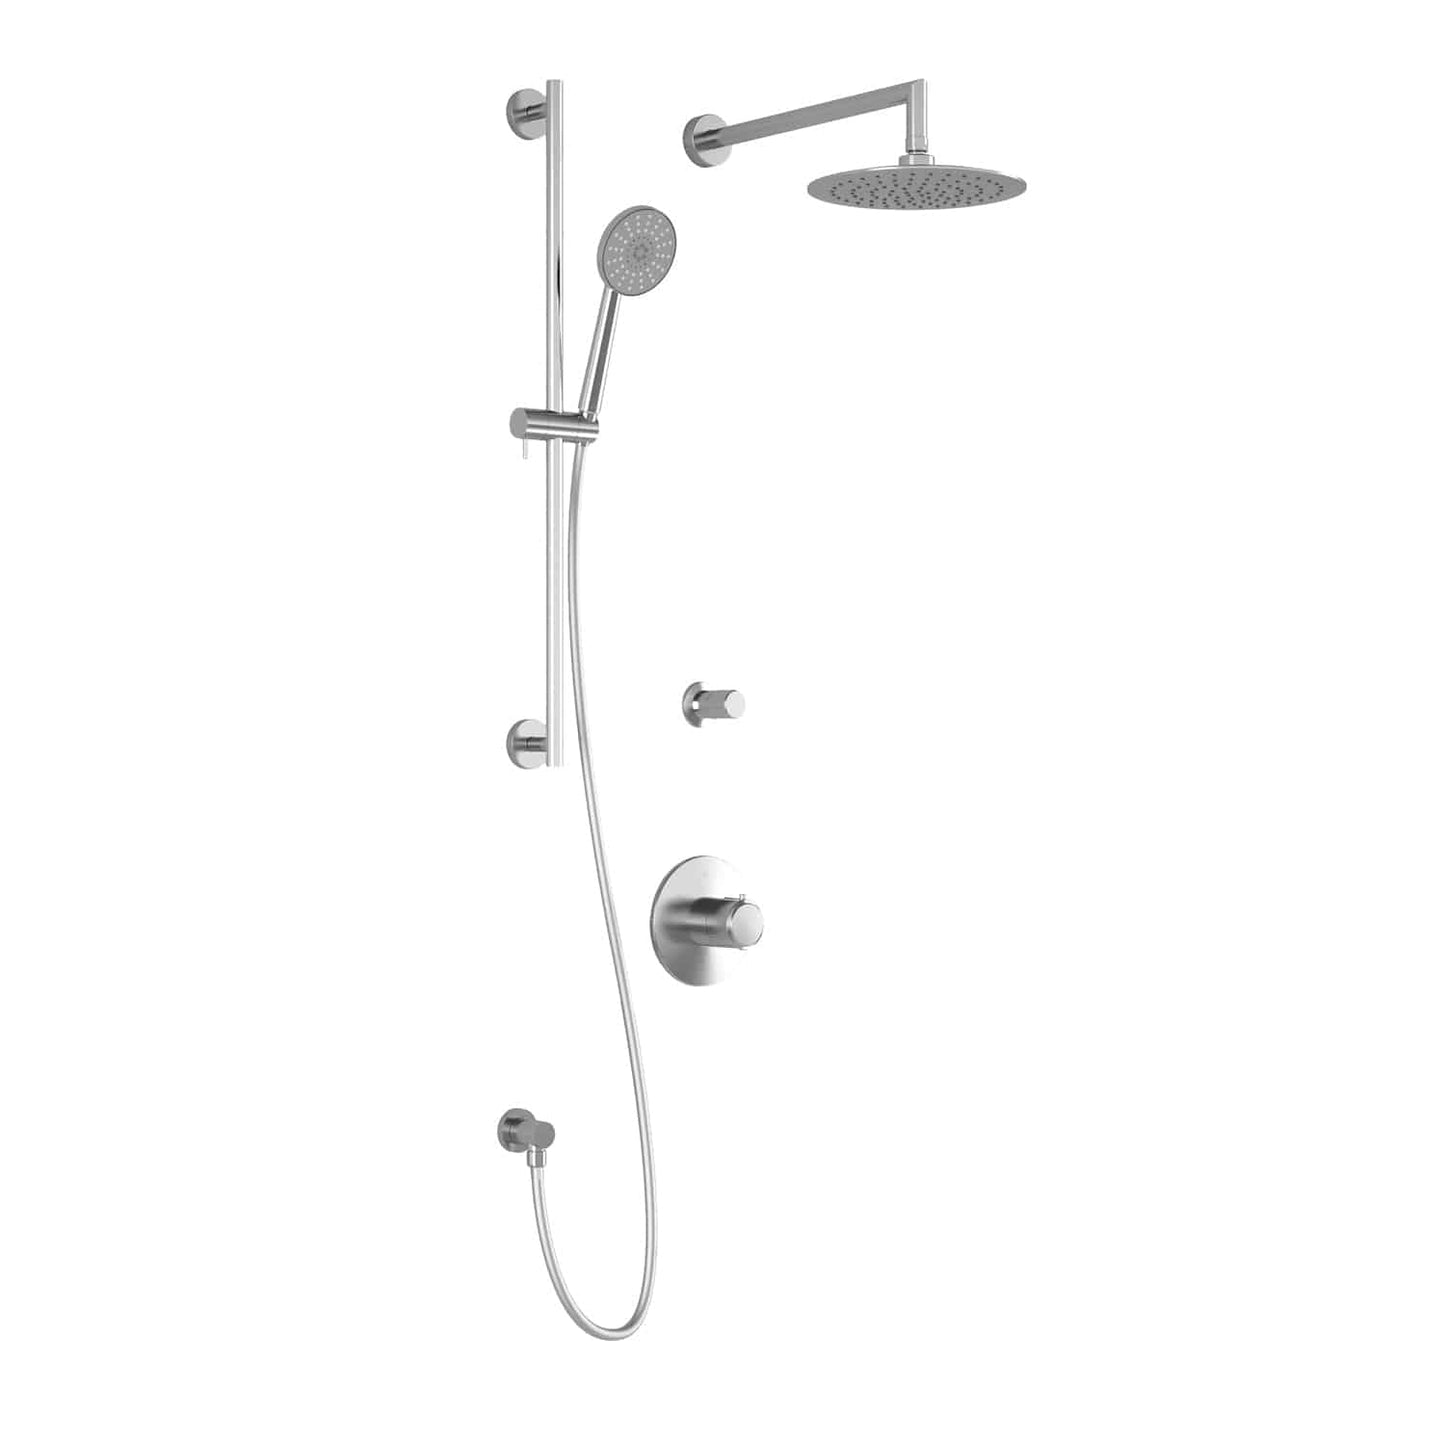 Kalia CITÉ TD2 AQUATONIK T/P Shower System with Wall Arm and 9" Round Rain Shower Head- Chrome